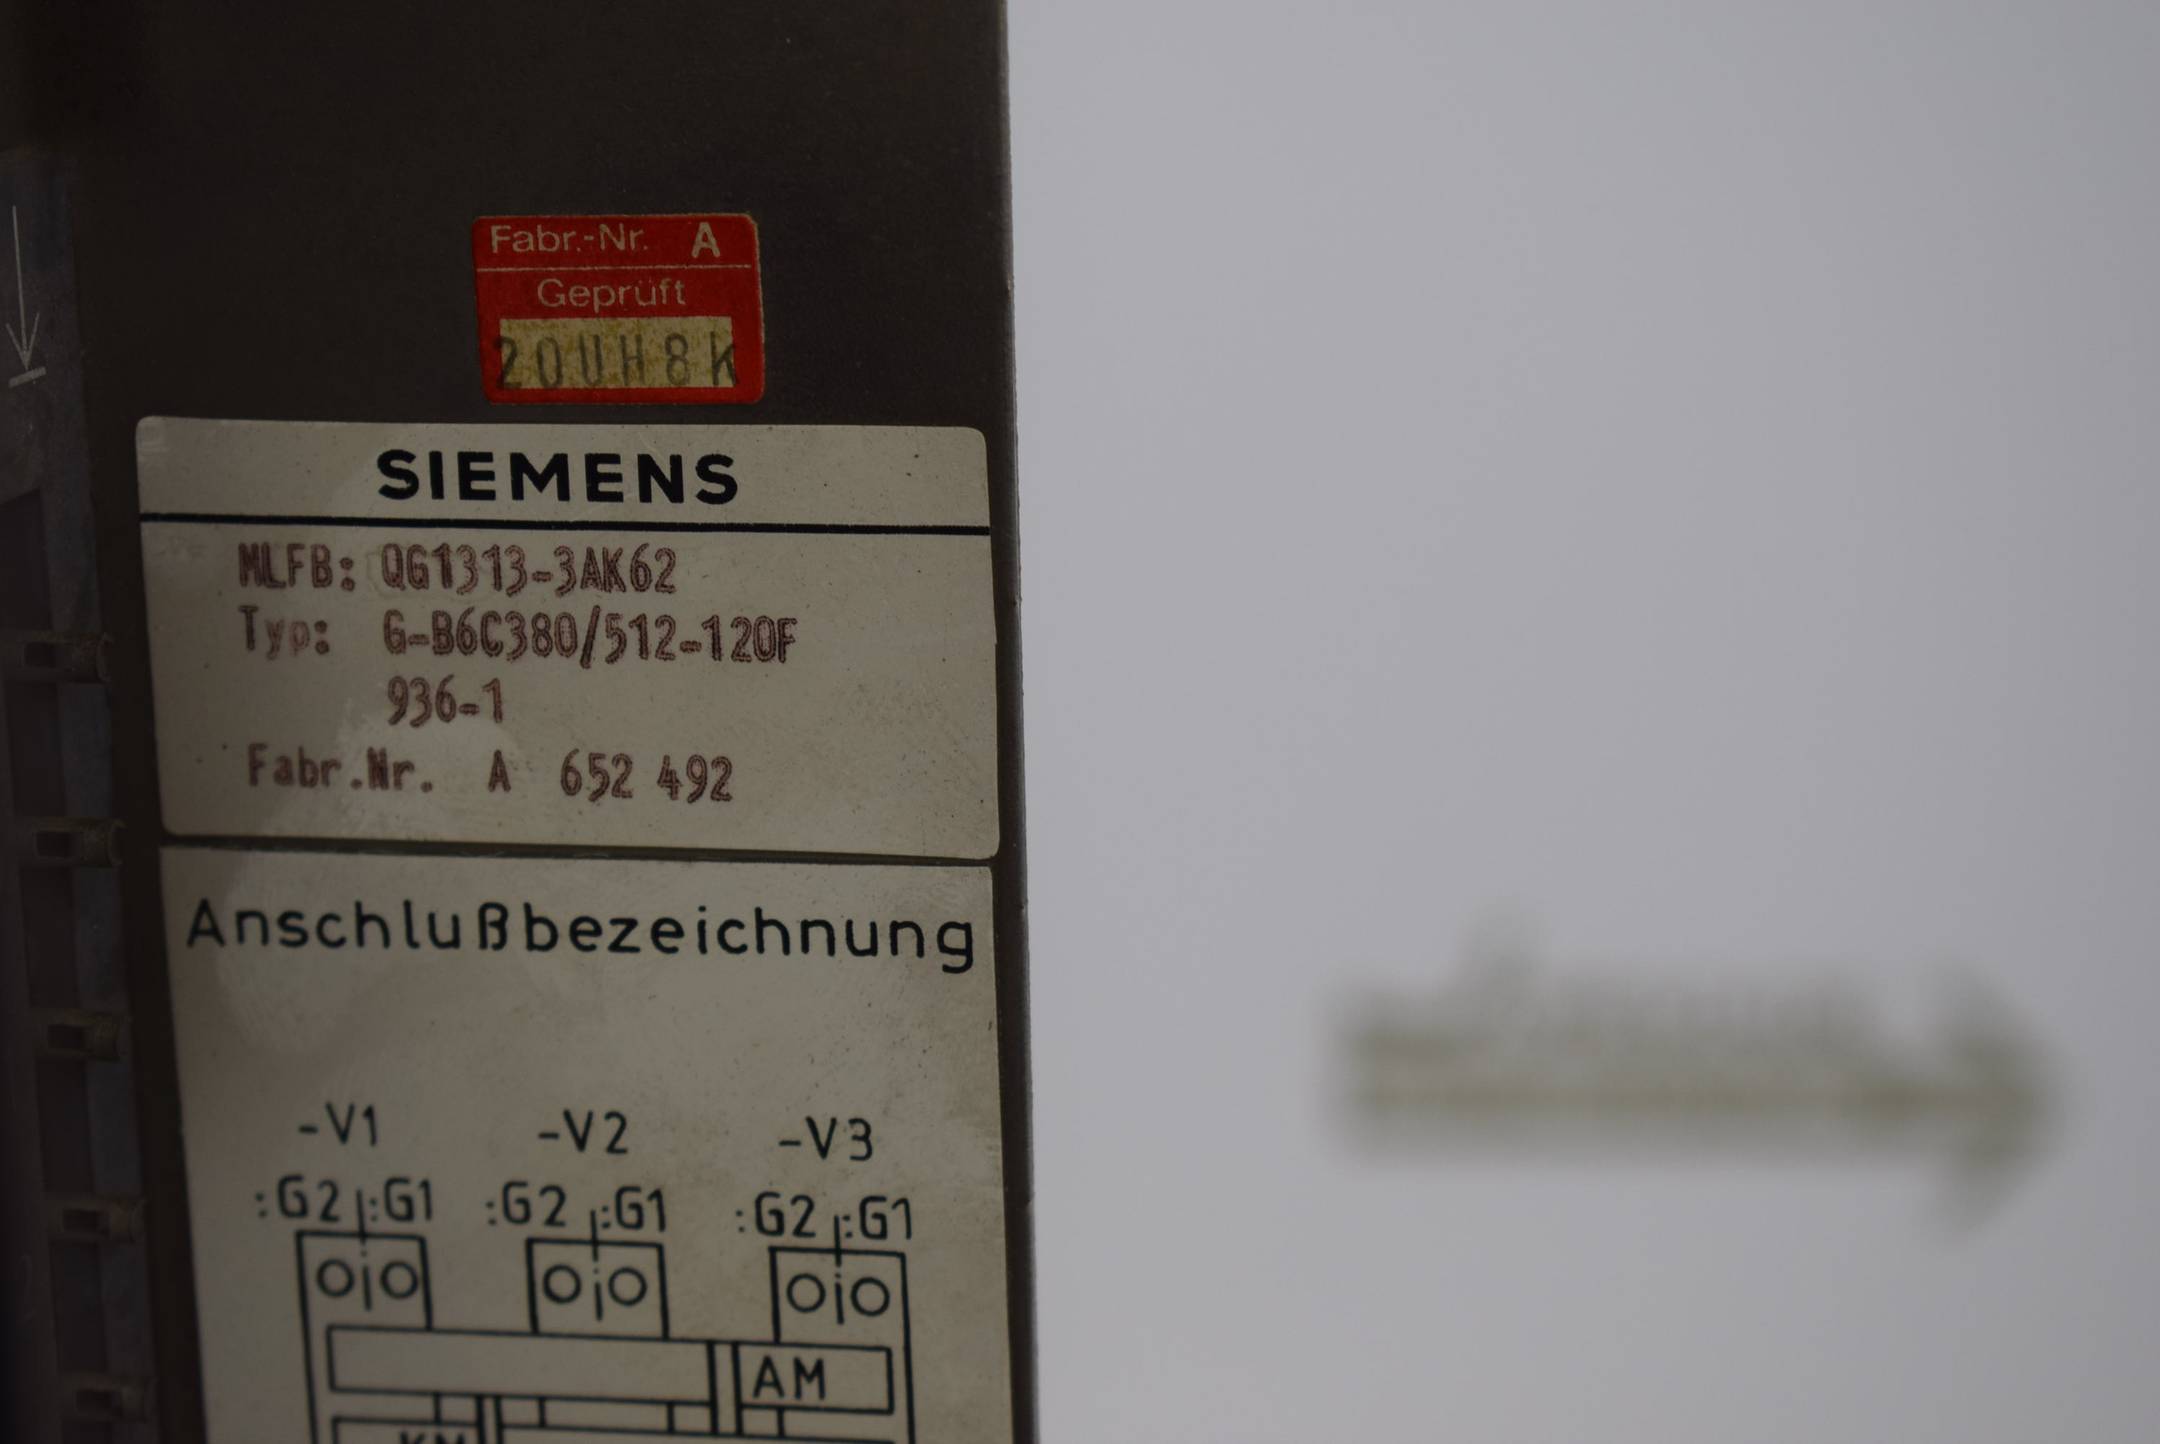 Siemens sitor Gleichrichtergerät QG1313-3AK62 ( 6QG1 313-3AK62 )